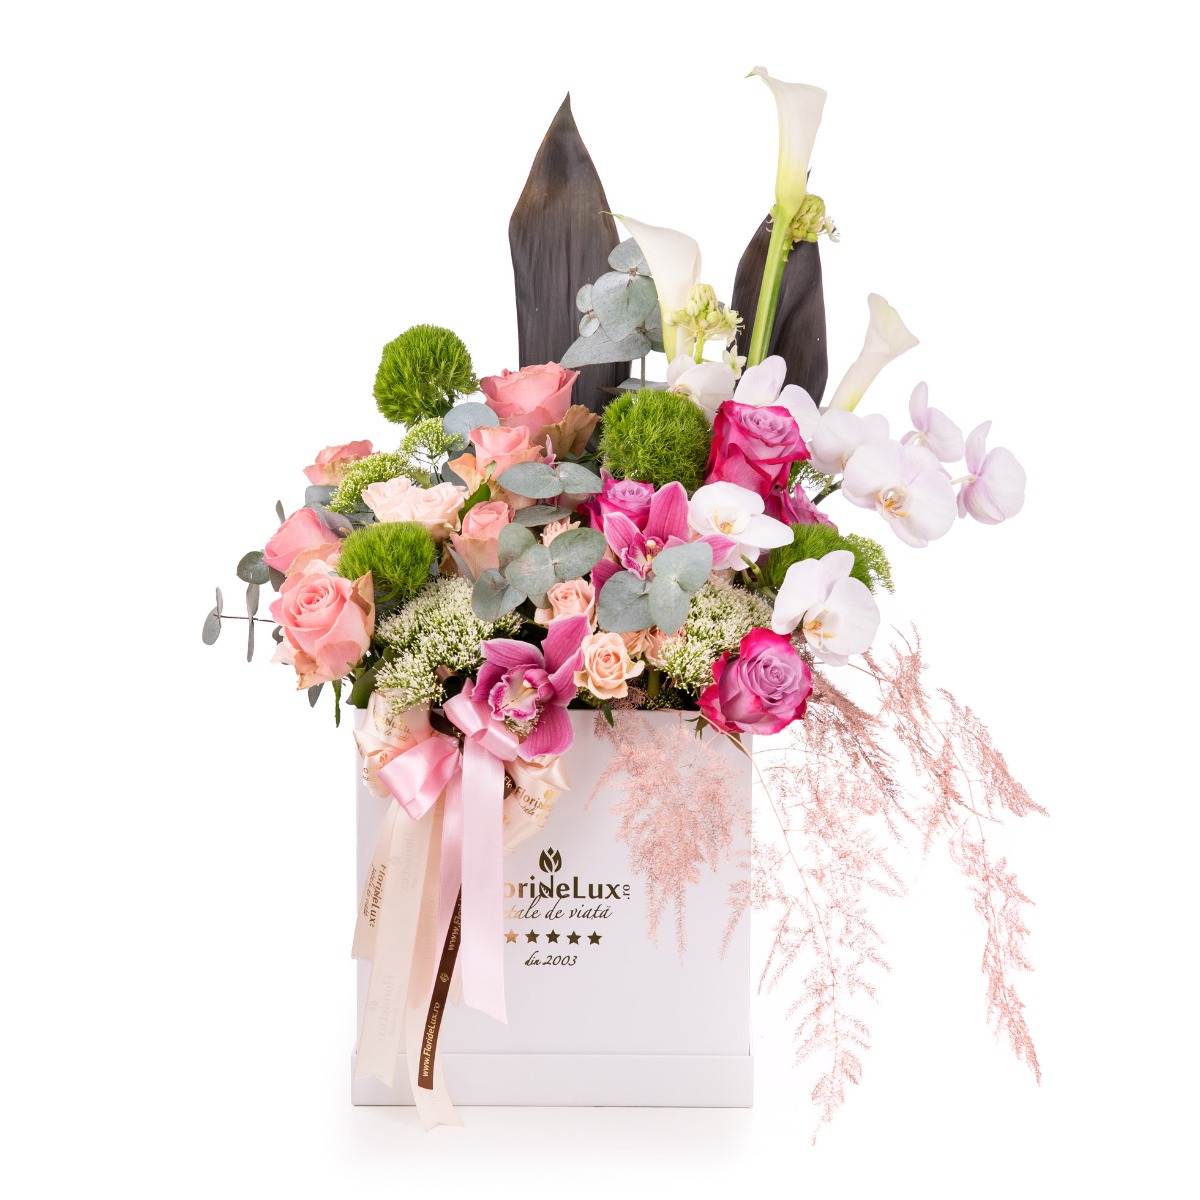 Flori parfumate in cutie eleganta